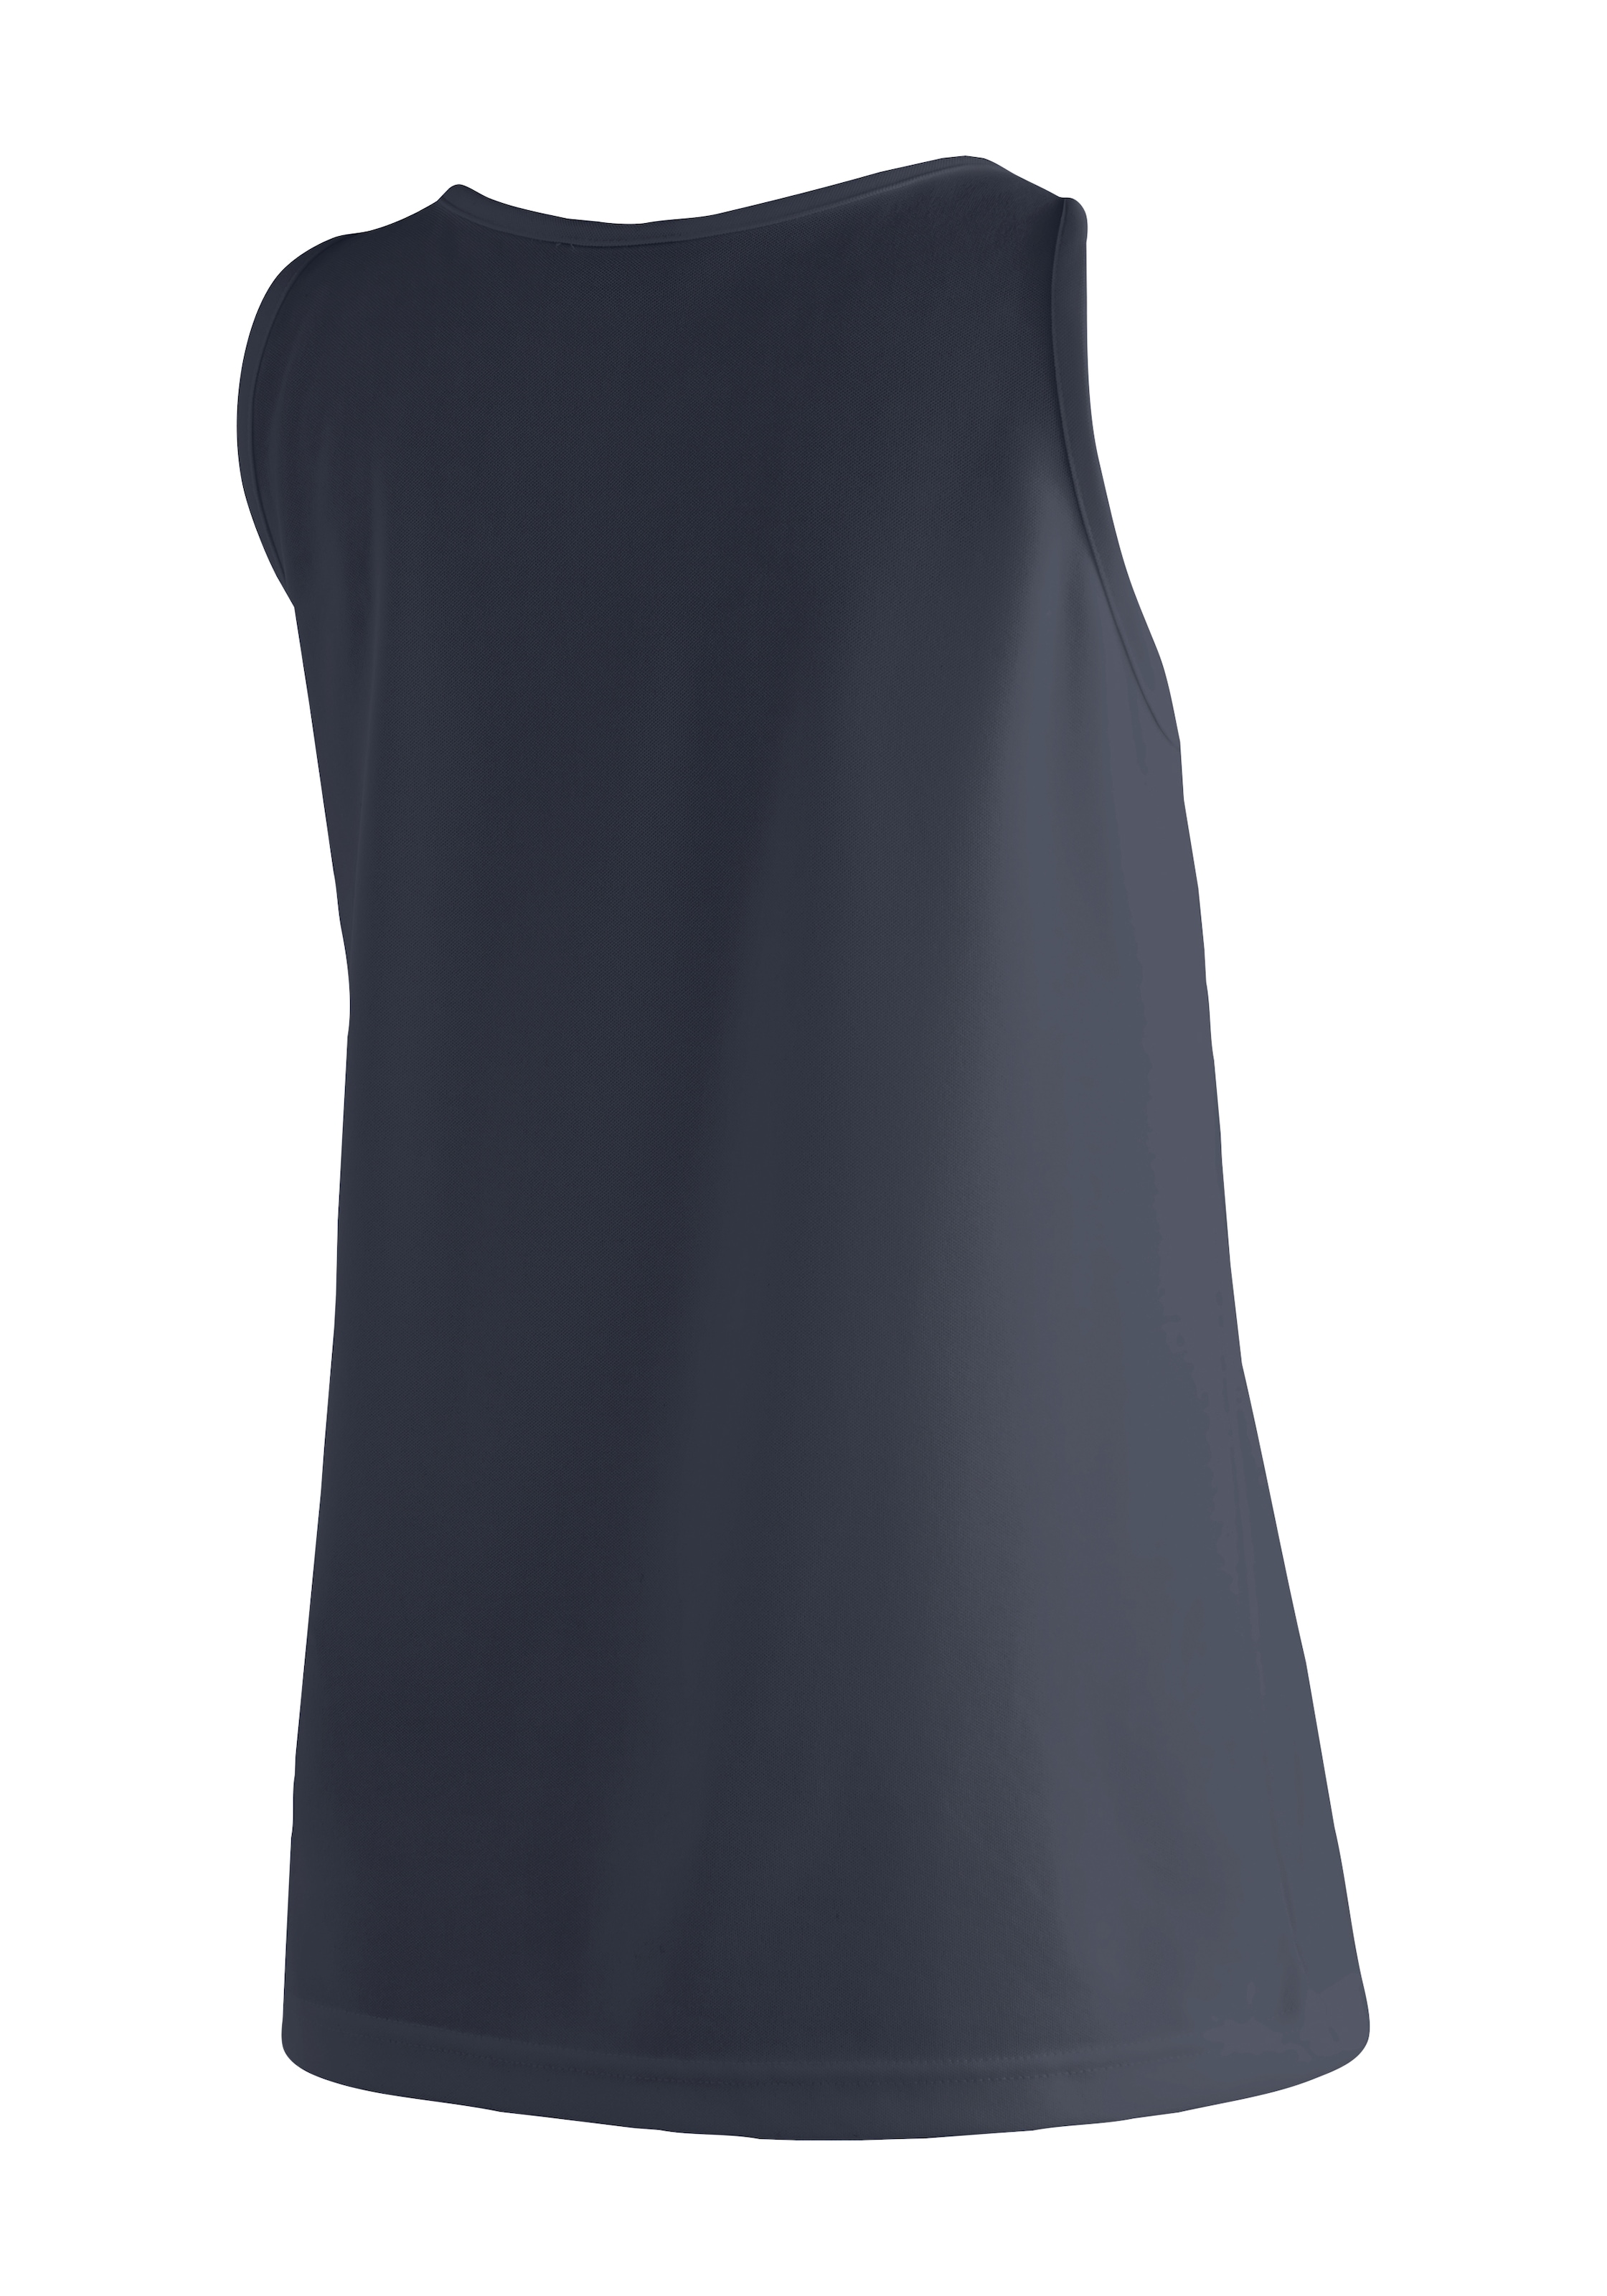 Maier Sports Outdoor- Funktionsshirt »Petra«, Sport Damen Tank-Top kaufen für ärmelloses und Aktivitäten, Shirt